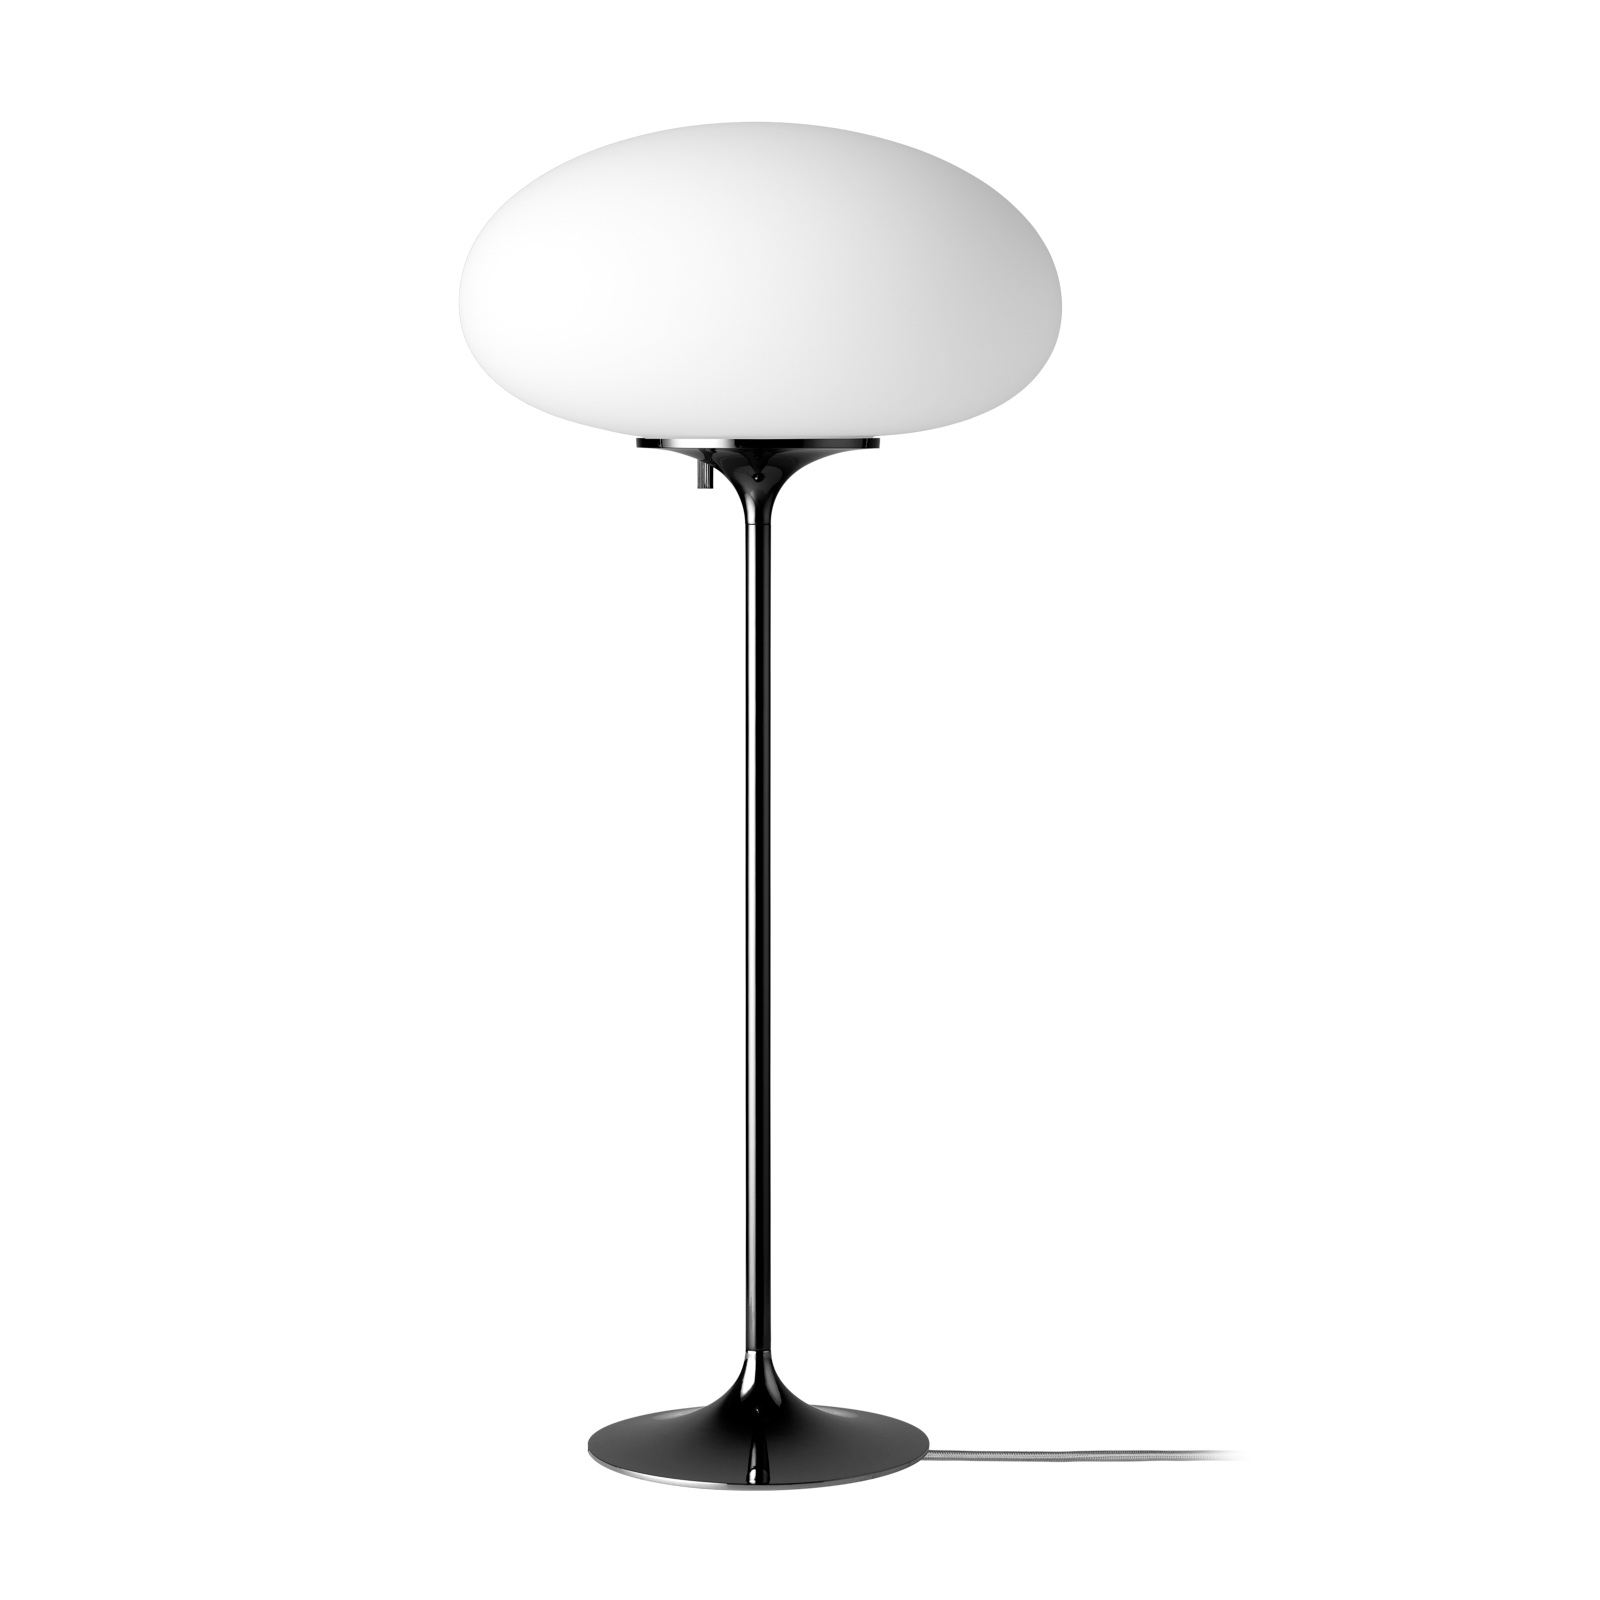 GUBI Stemlite tafellamp, zwart-chroom, 70 cm